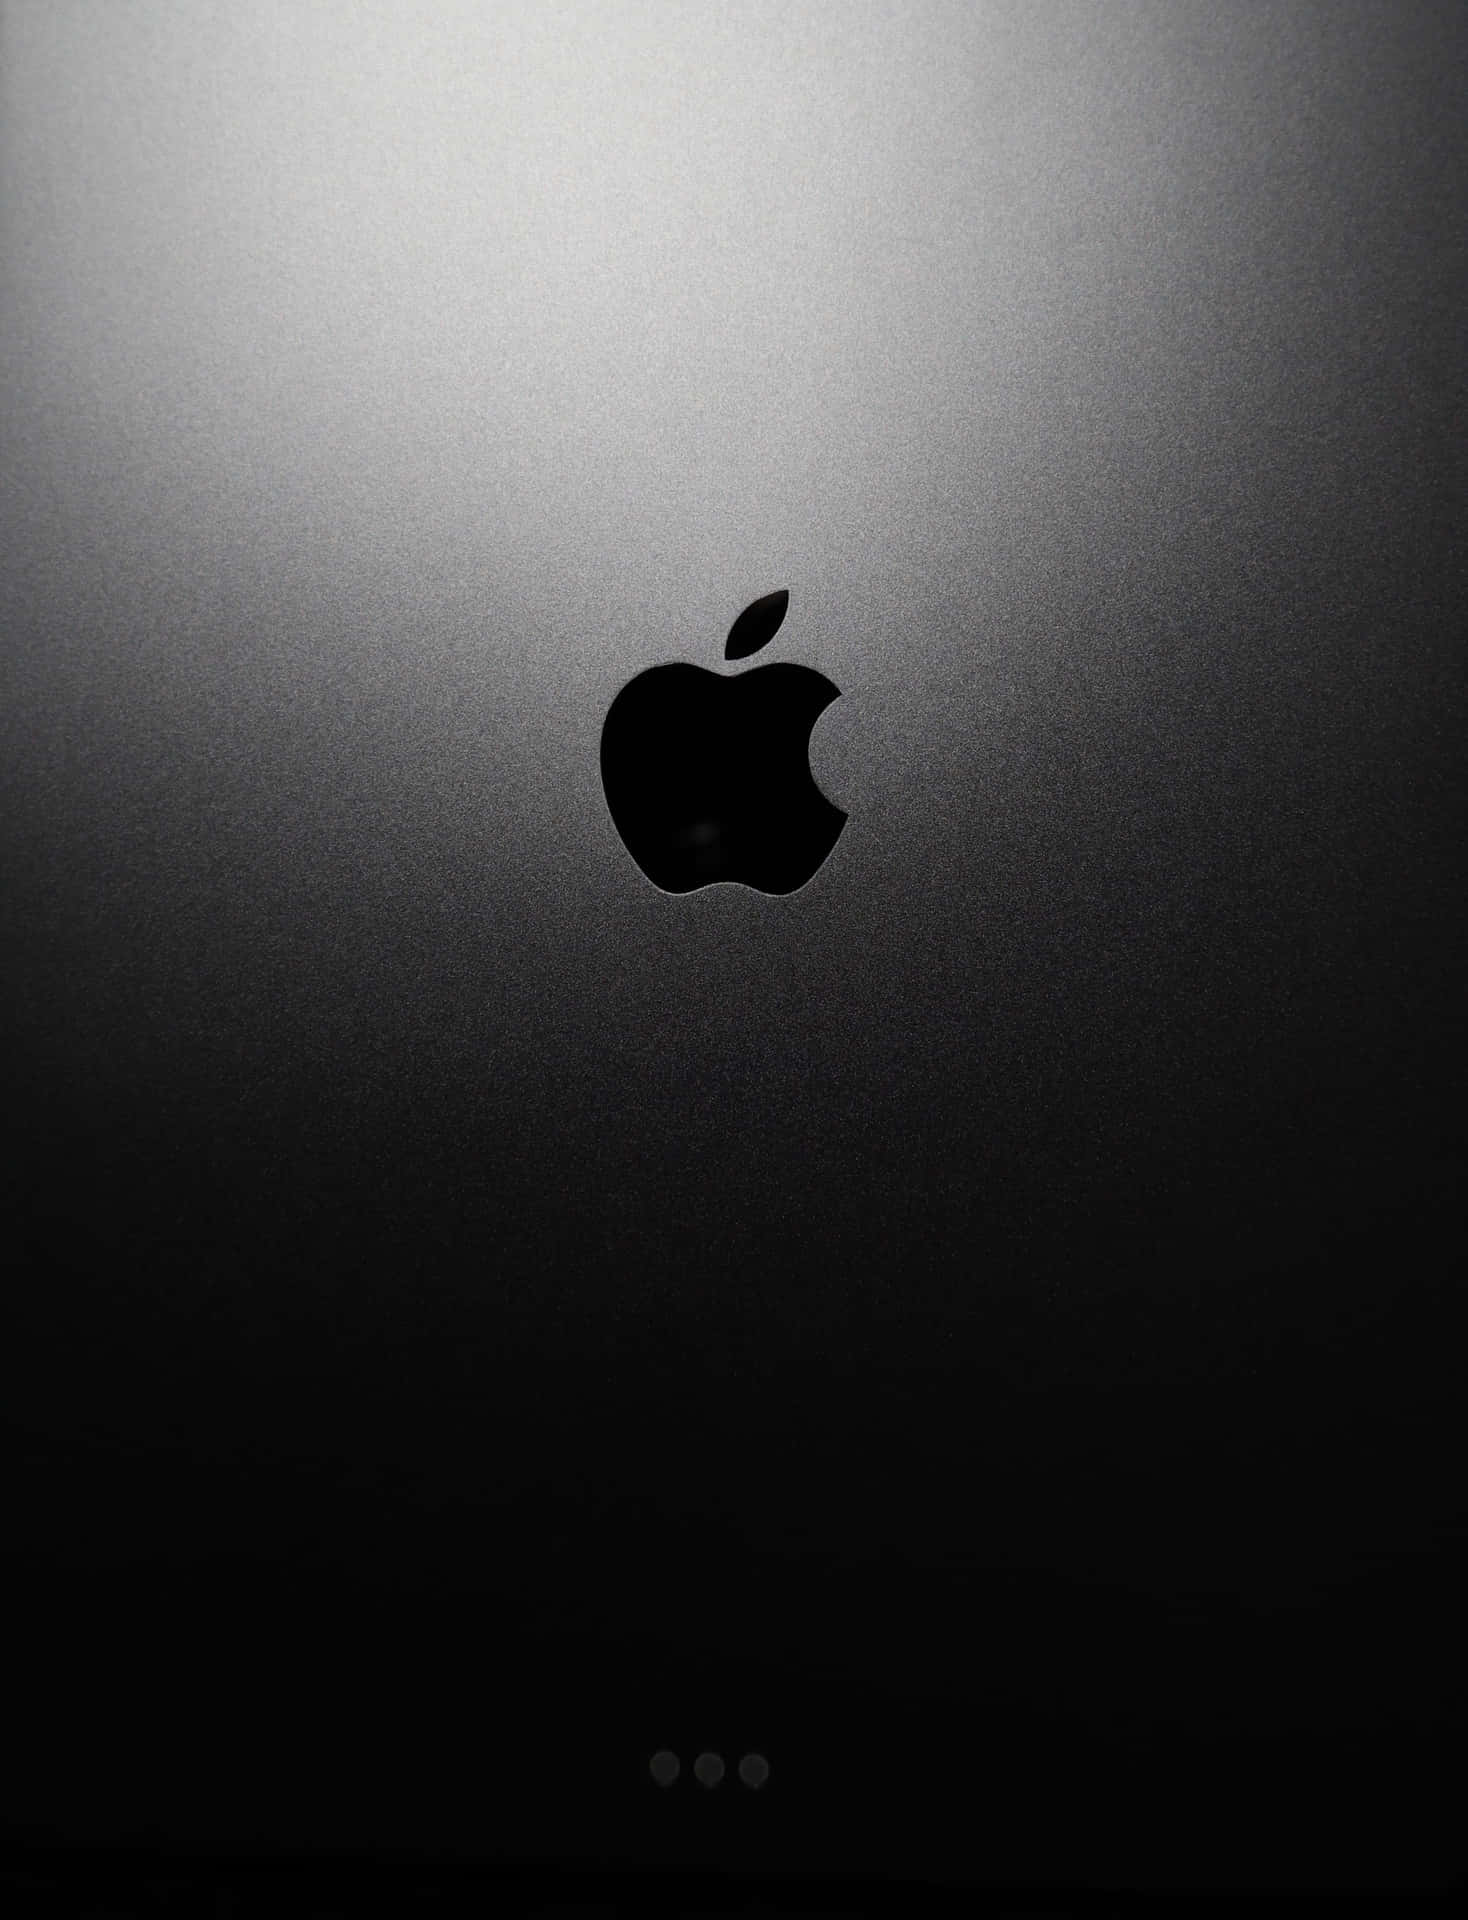 Äpplelogotypen Belyser Baksidan Av En Iphone X. Wallpaper